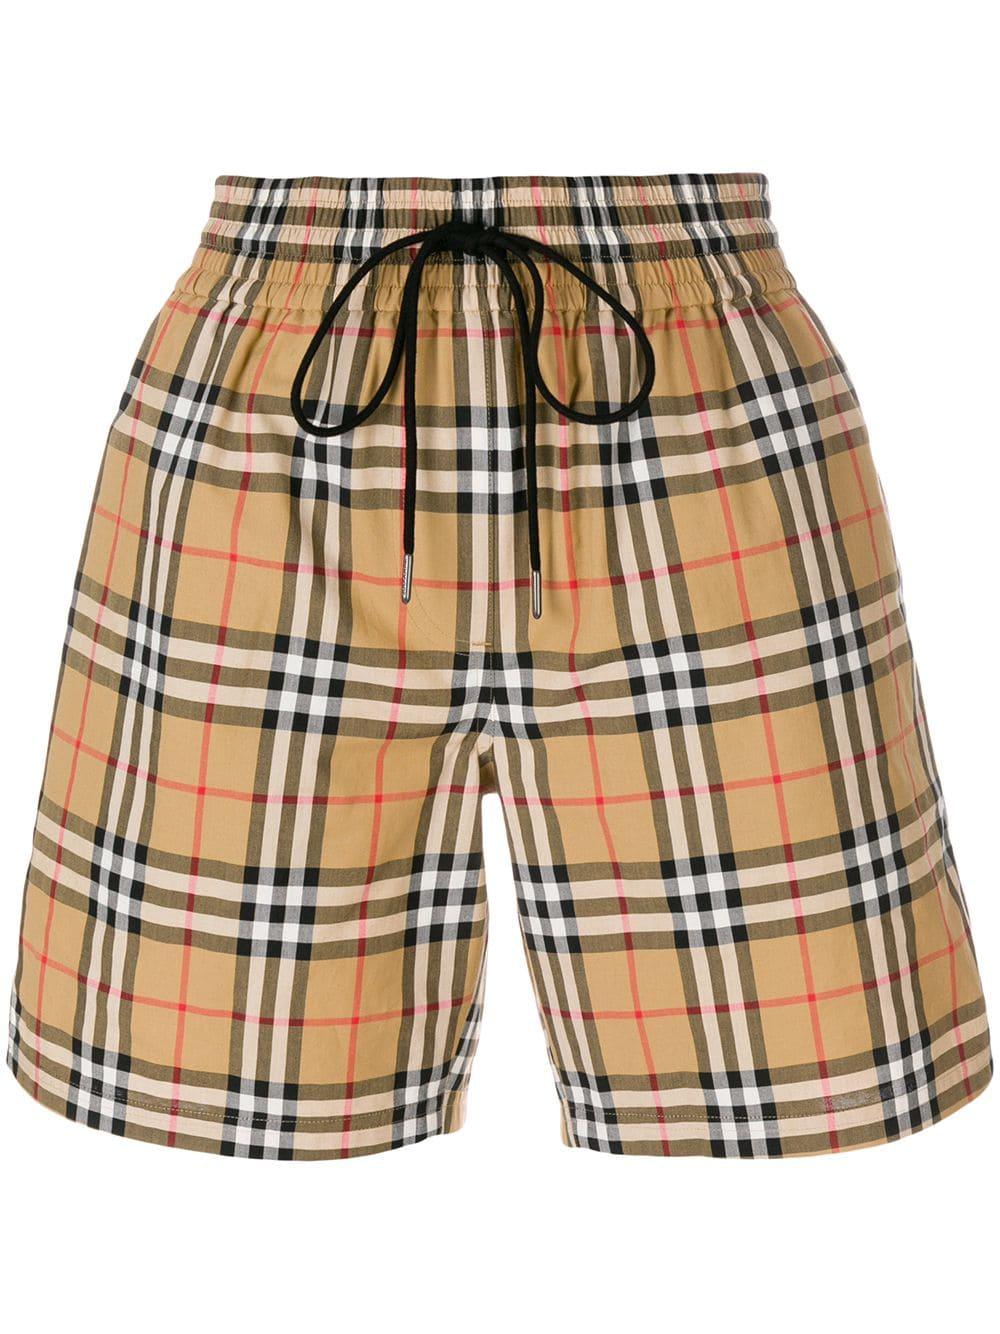 Burberry Cotton Vintage Check Shorts - Lyst